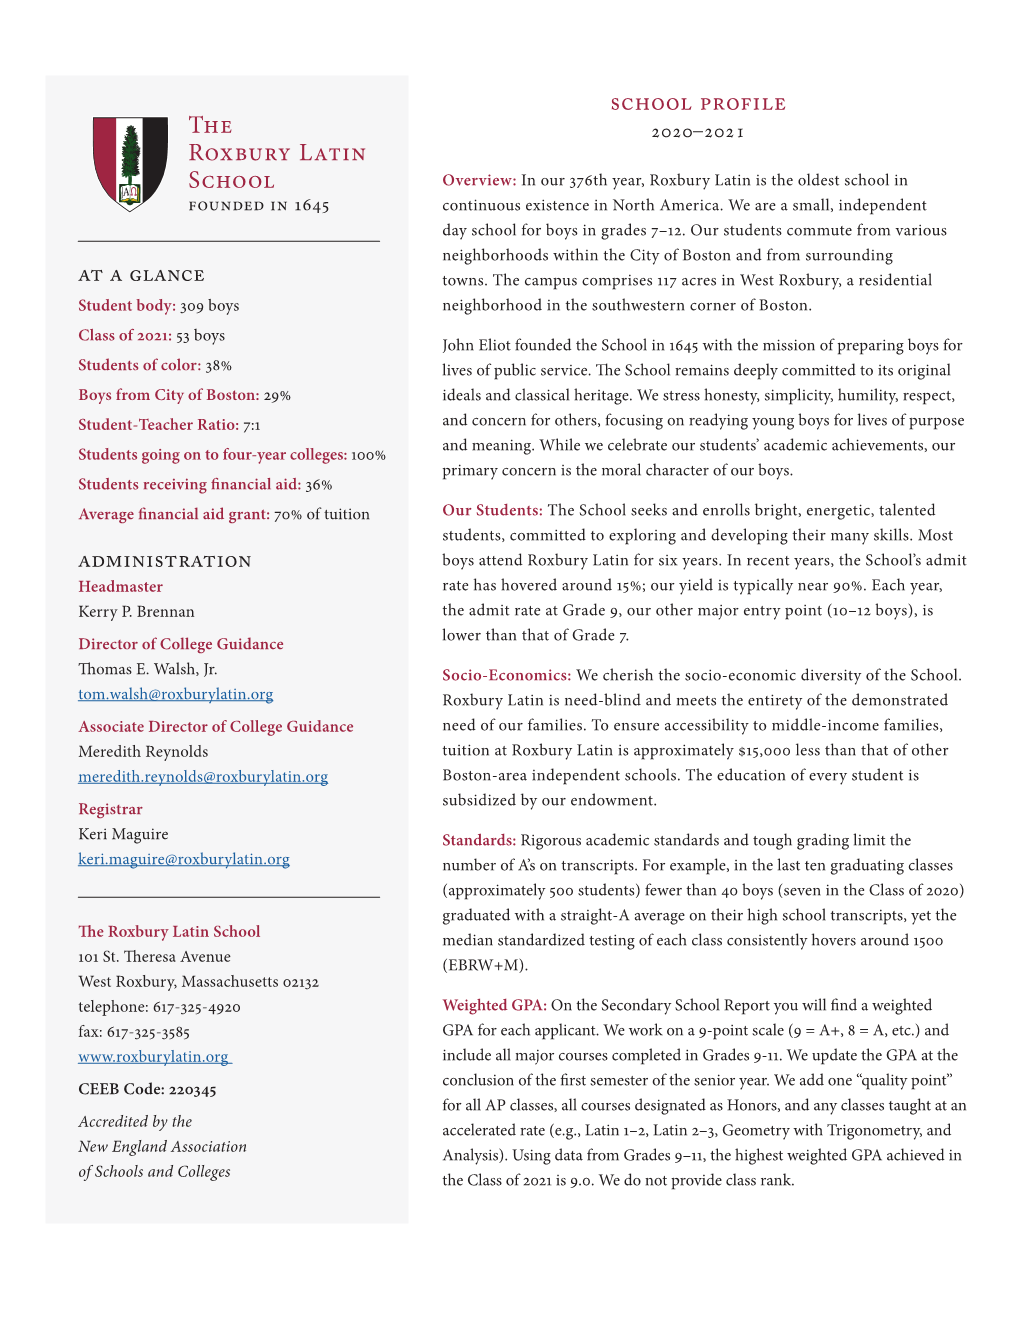 Roxbury Latin School Profile 2020-2021